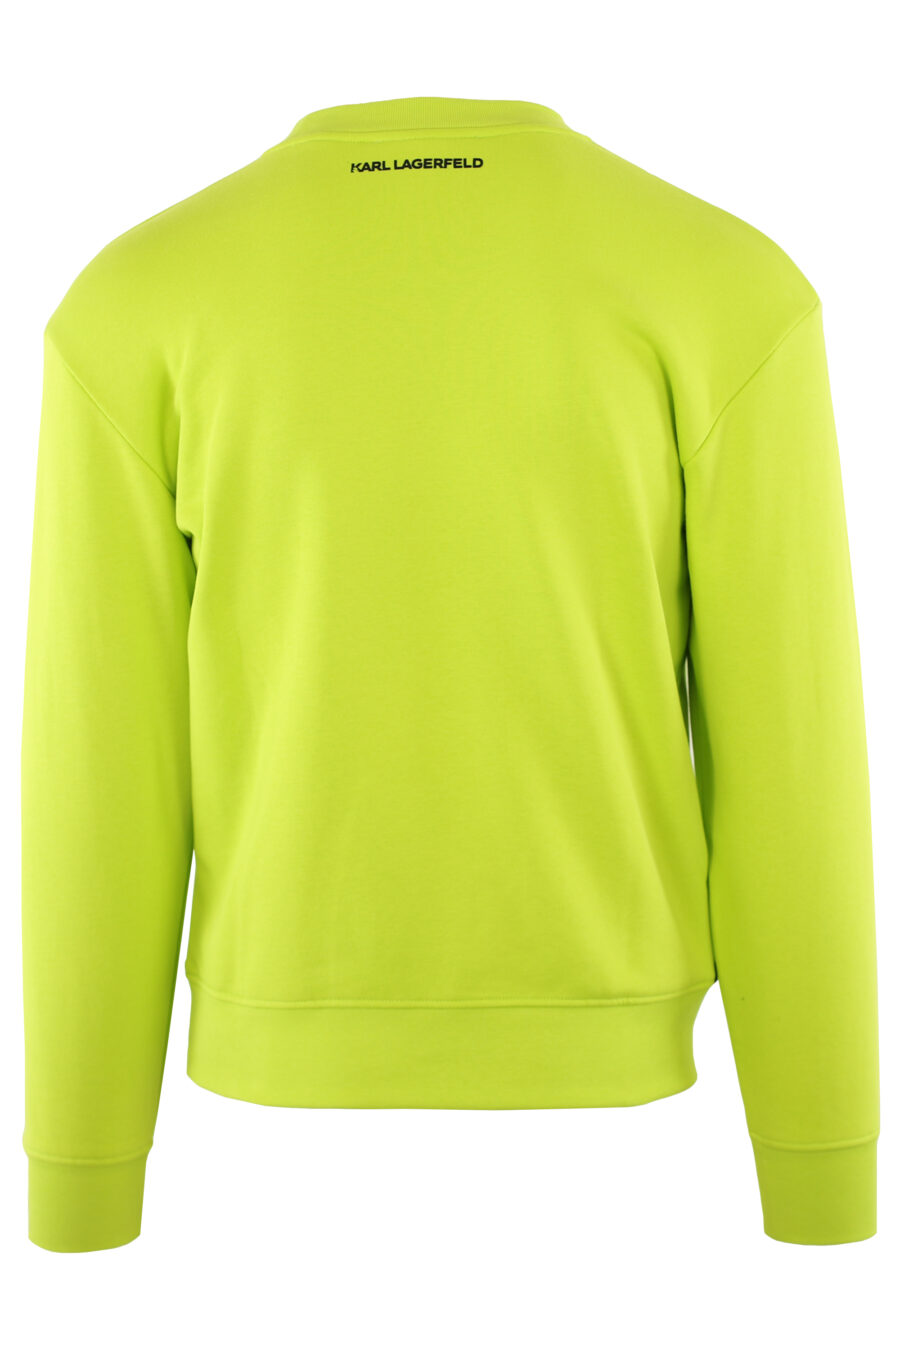 Lindgrünes Sweatshirt mit großem runden Logo - IMG 7426